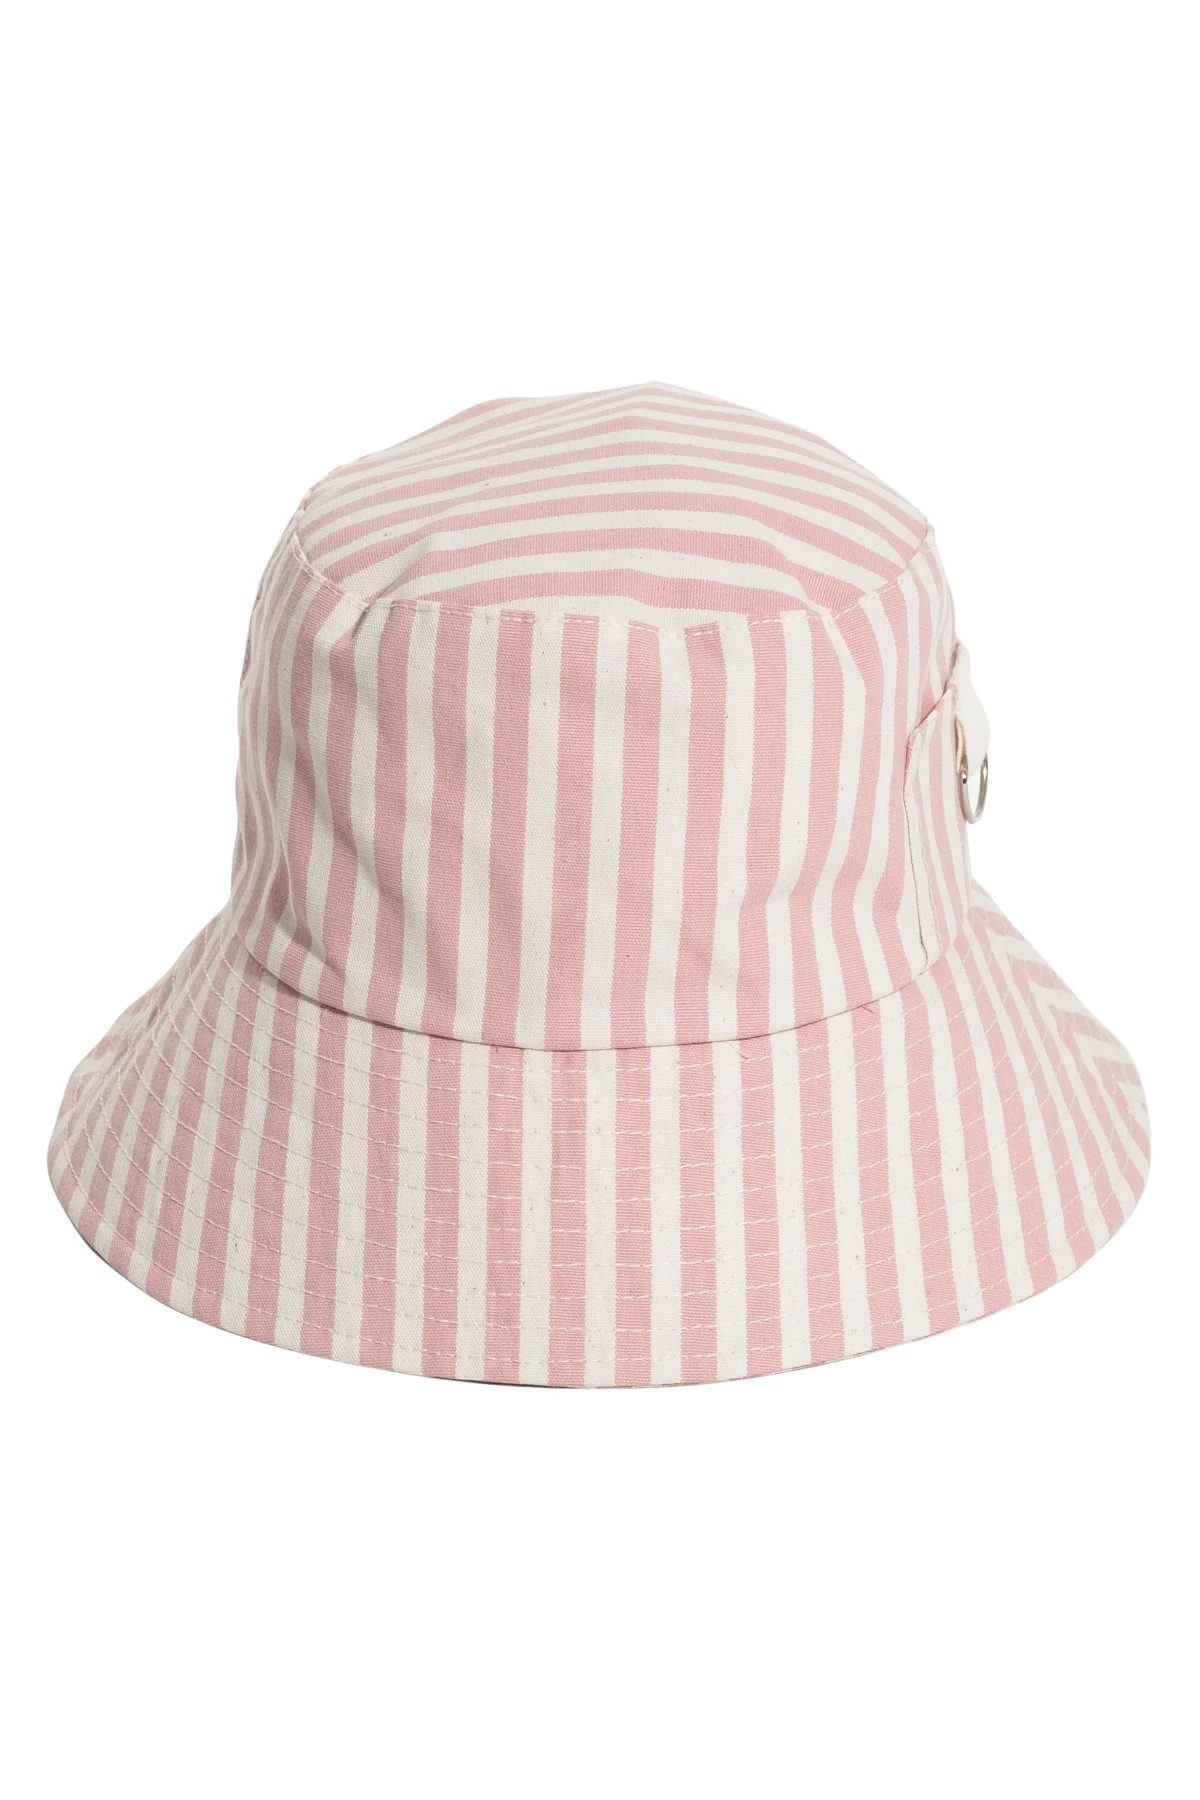 LAURENS PINK STRIPE Canvas Striped Bucket Hat L/XL image number 1